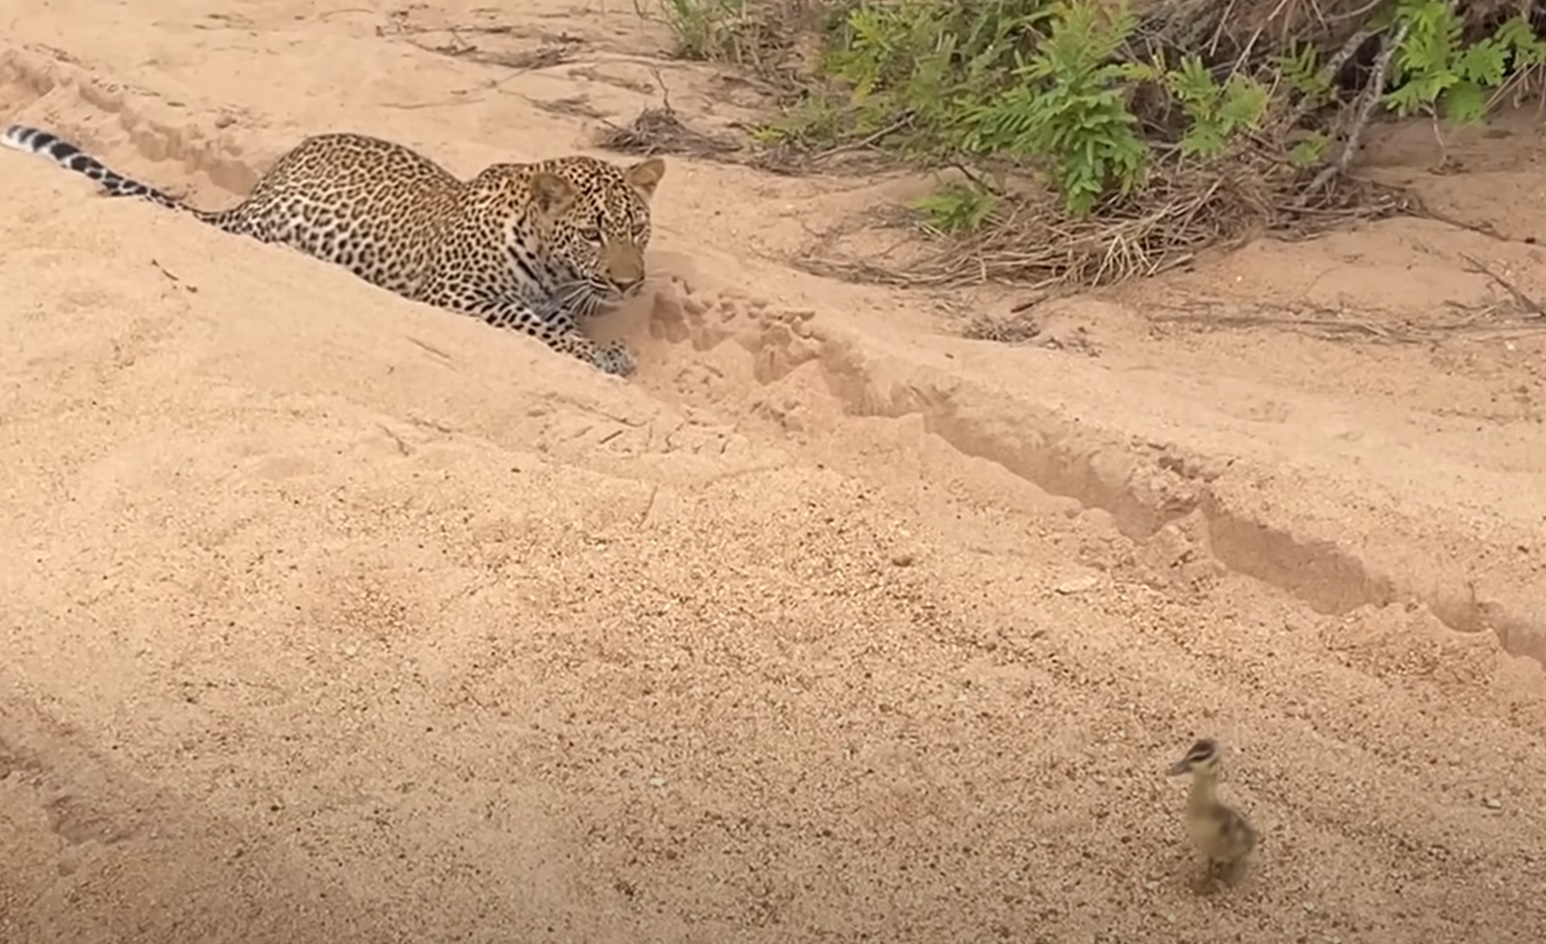 Baby Bird Walks up to Leopard - Unexpected Ending